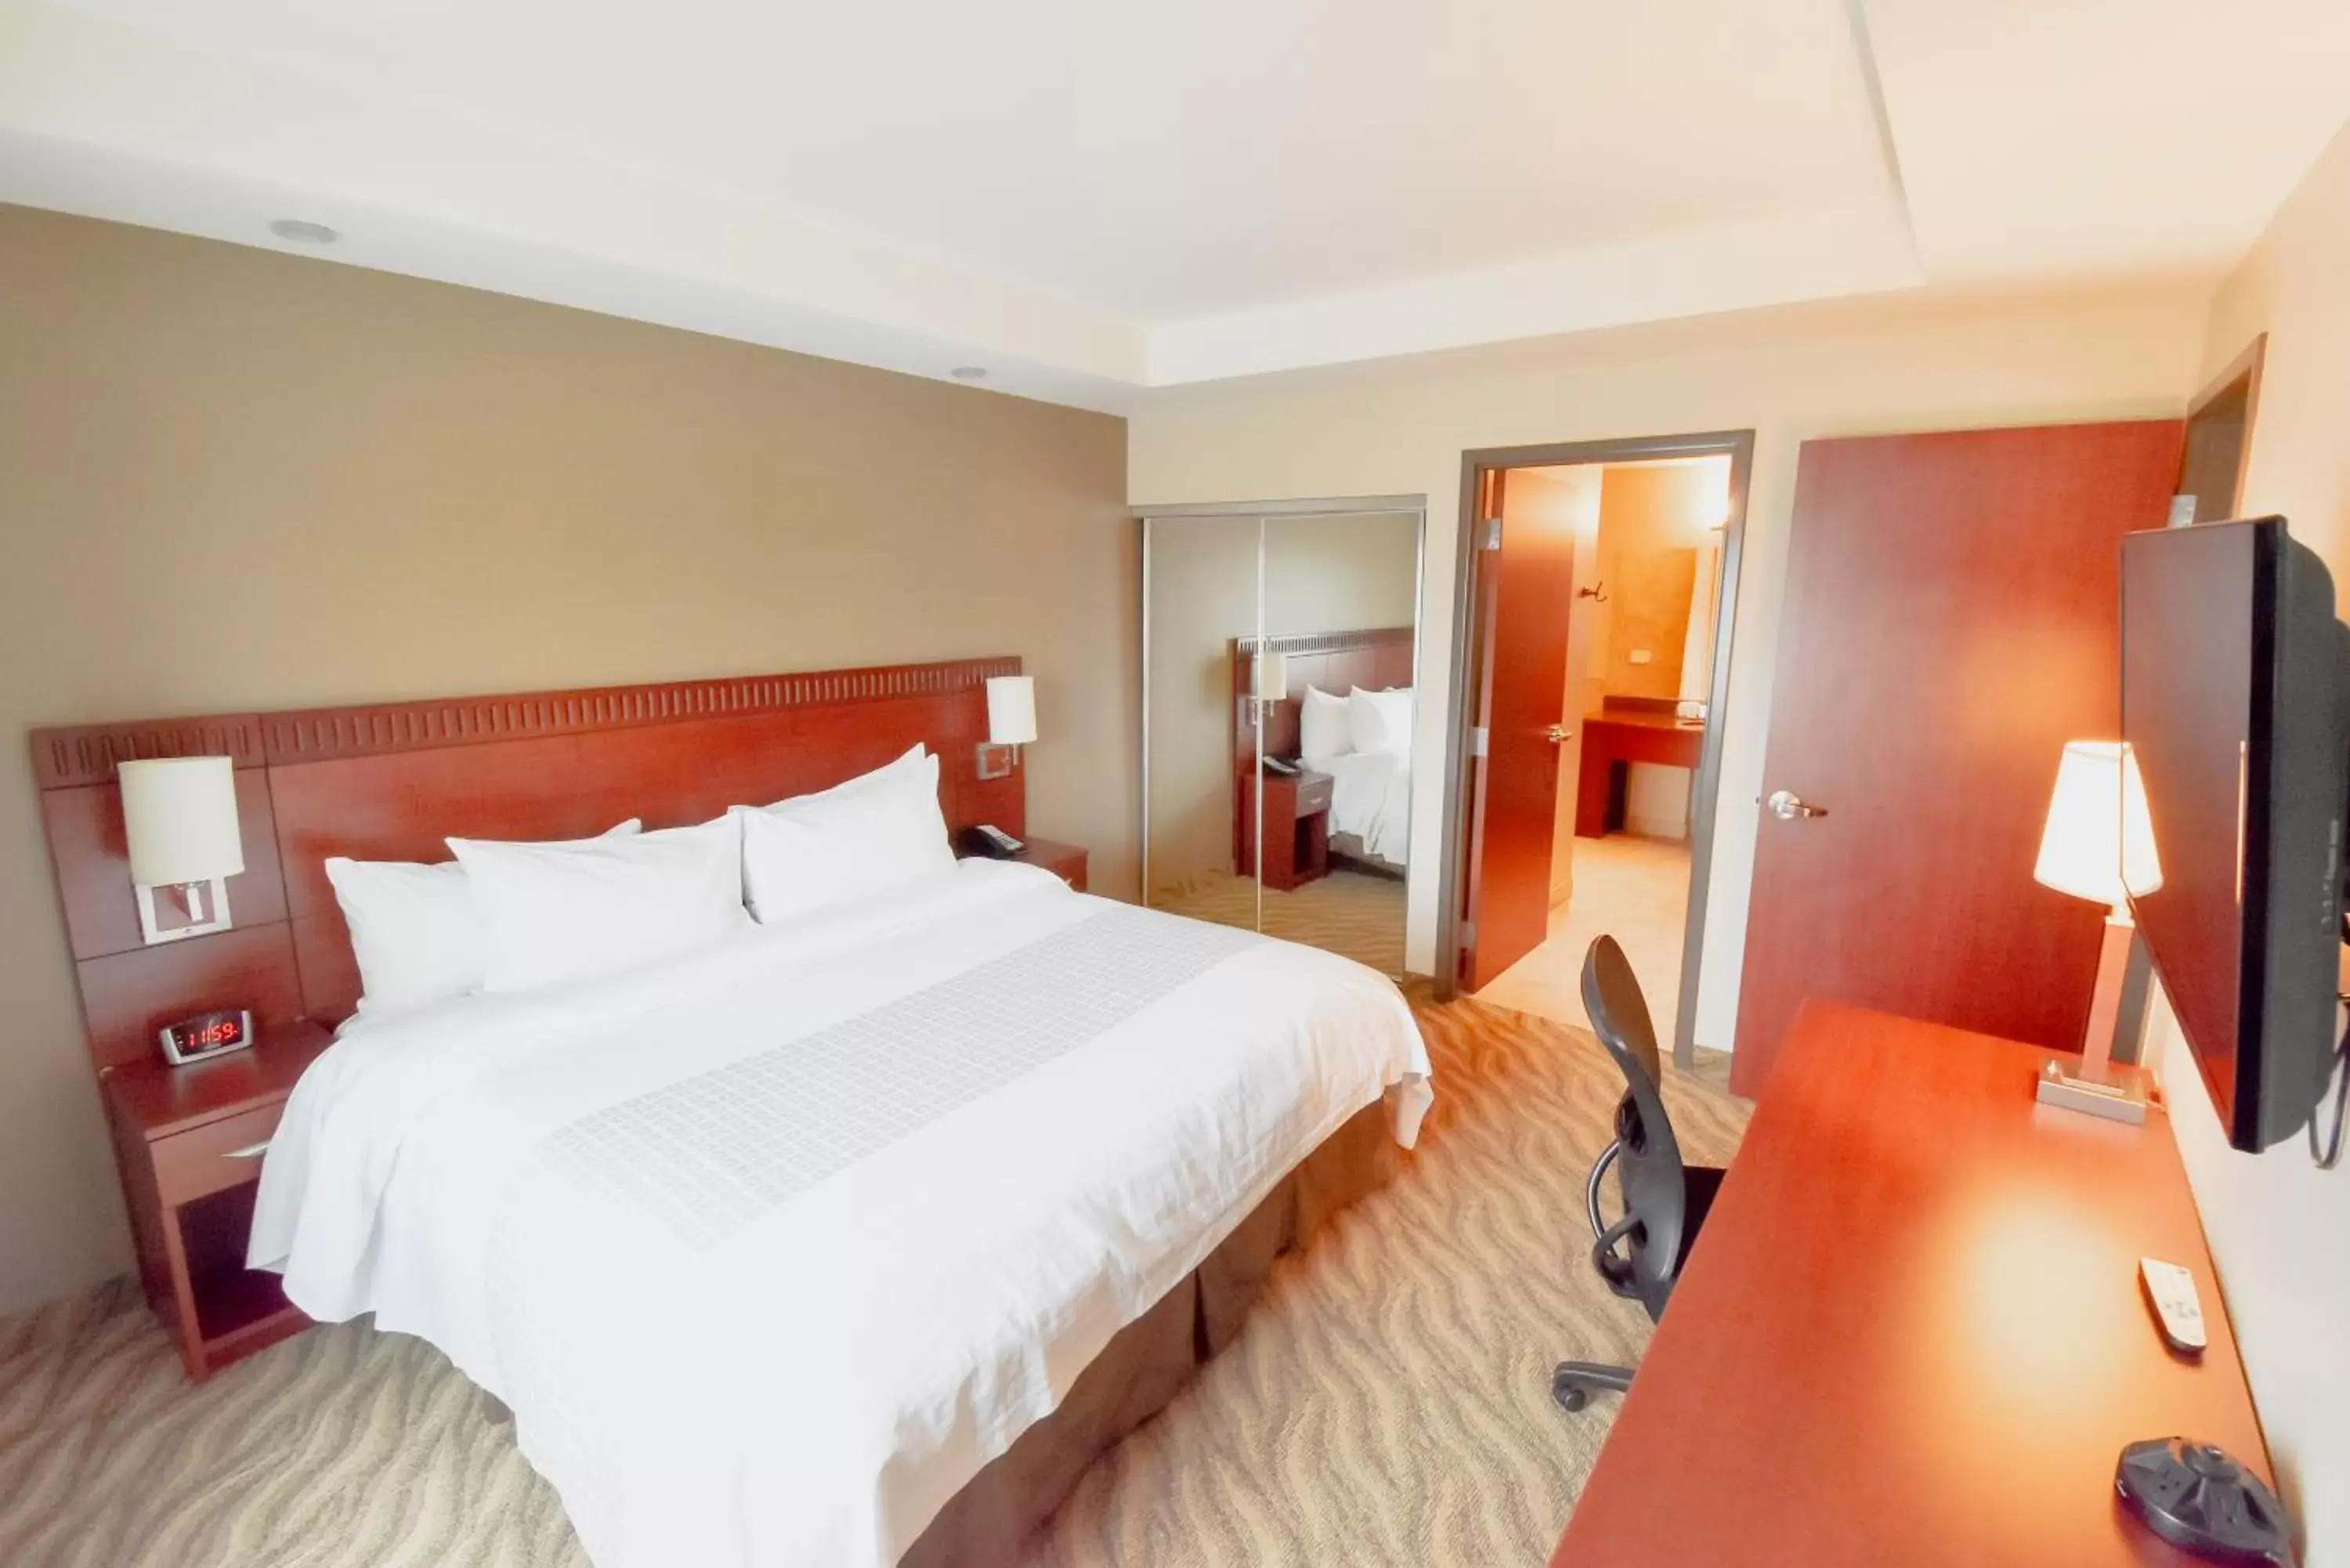 Bedroom, Bed in Canad Inns Destination Centre Garden City